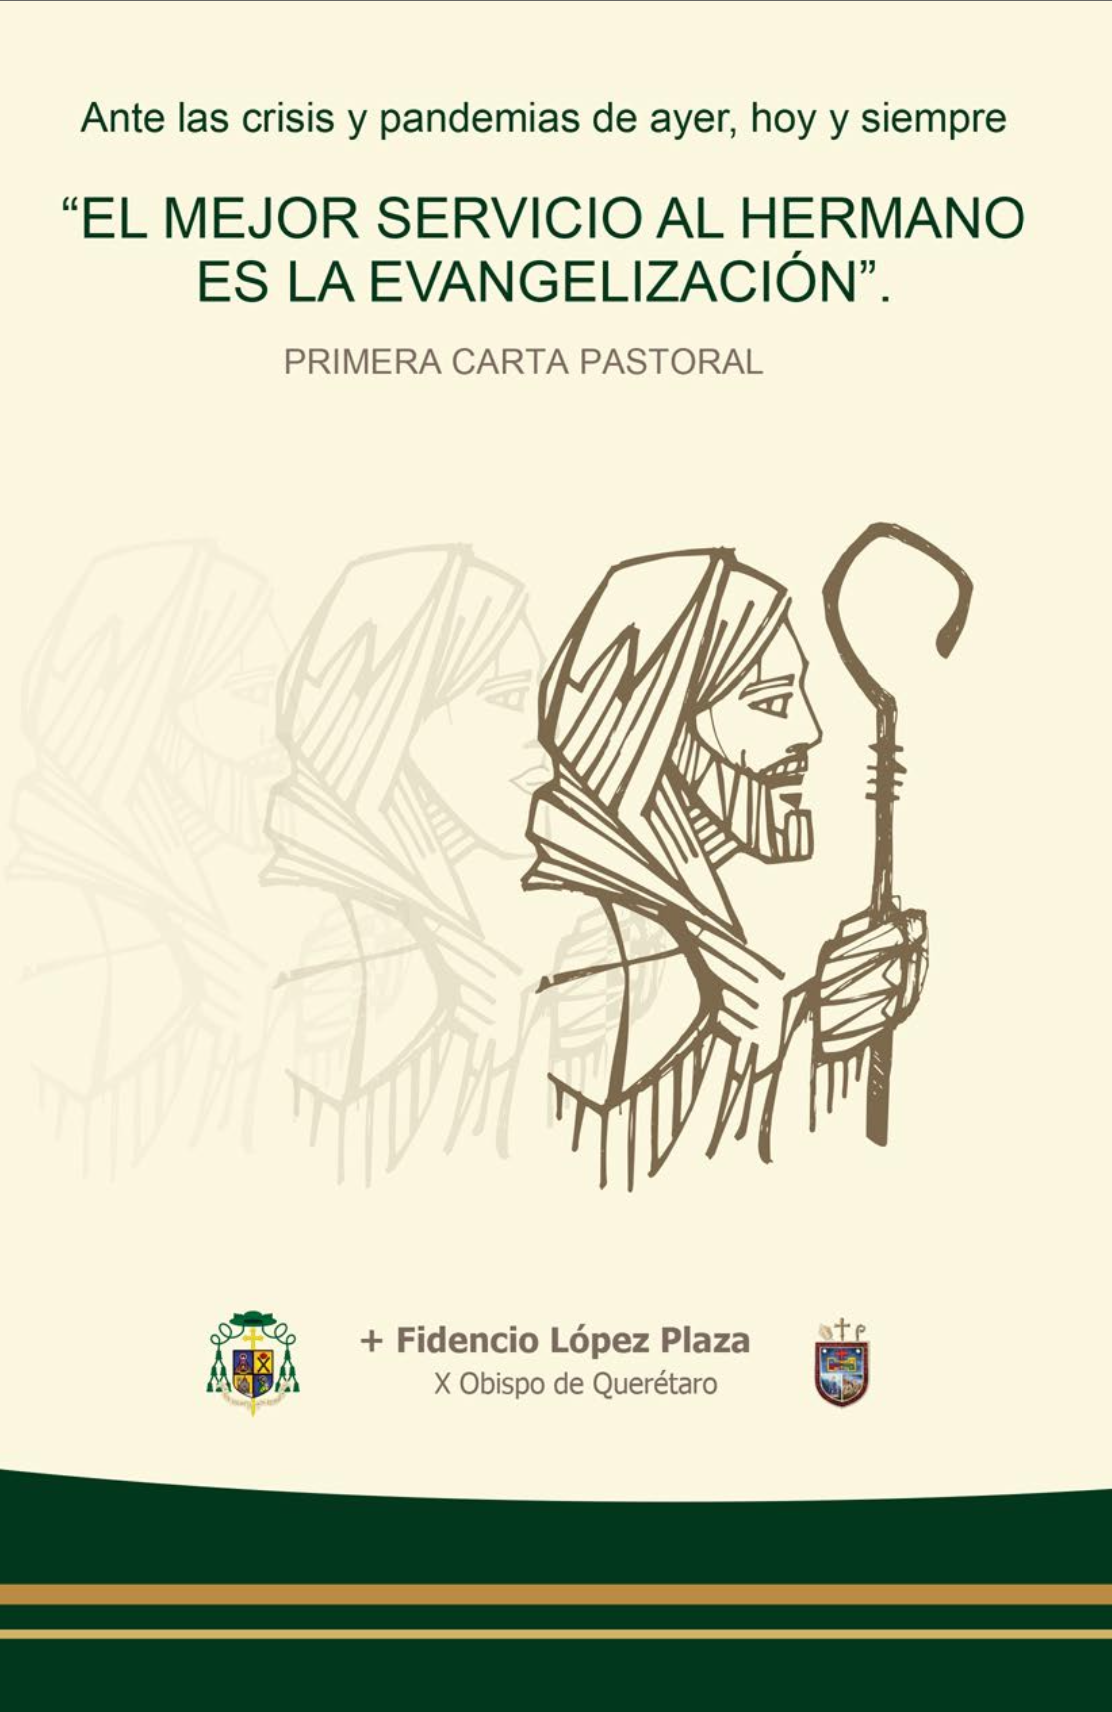 Carta Pastoral de Mons. Fidencio López Plaza. X Obispo de la Diócesis de Querétaro.